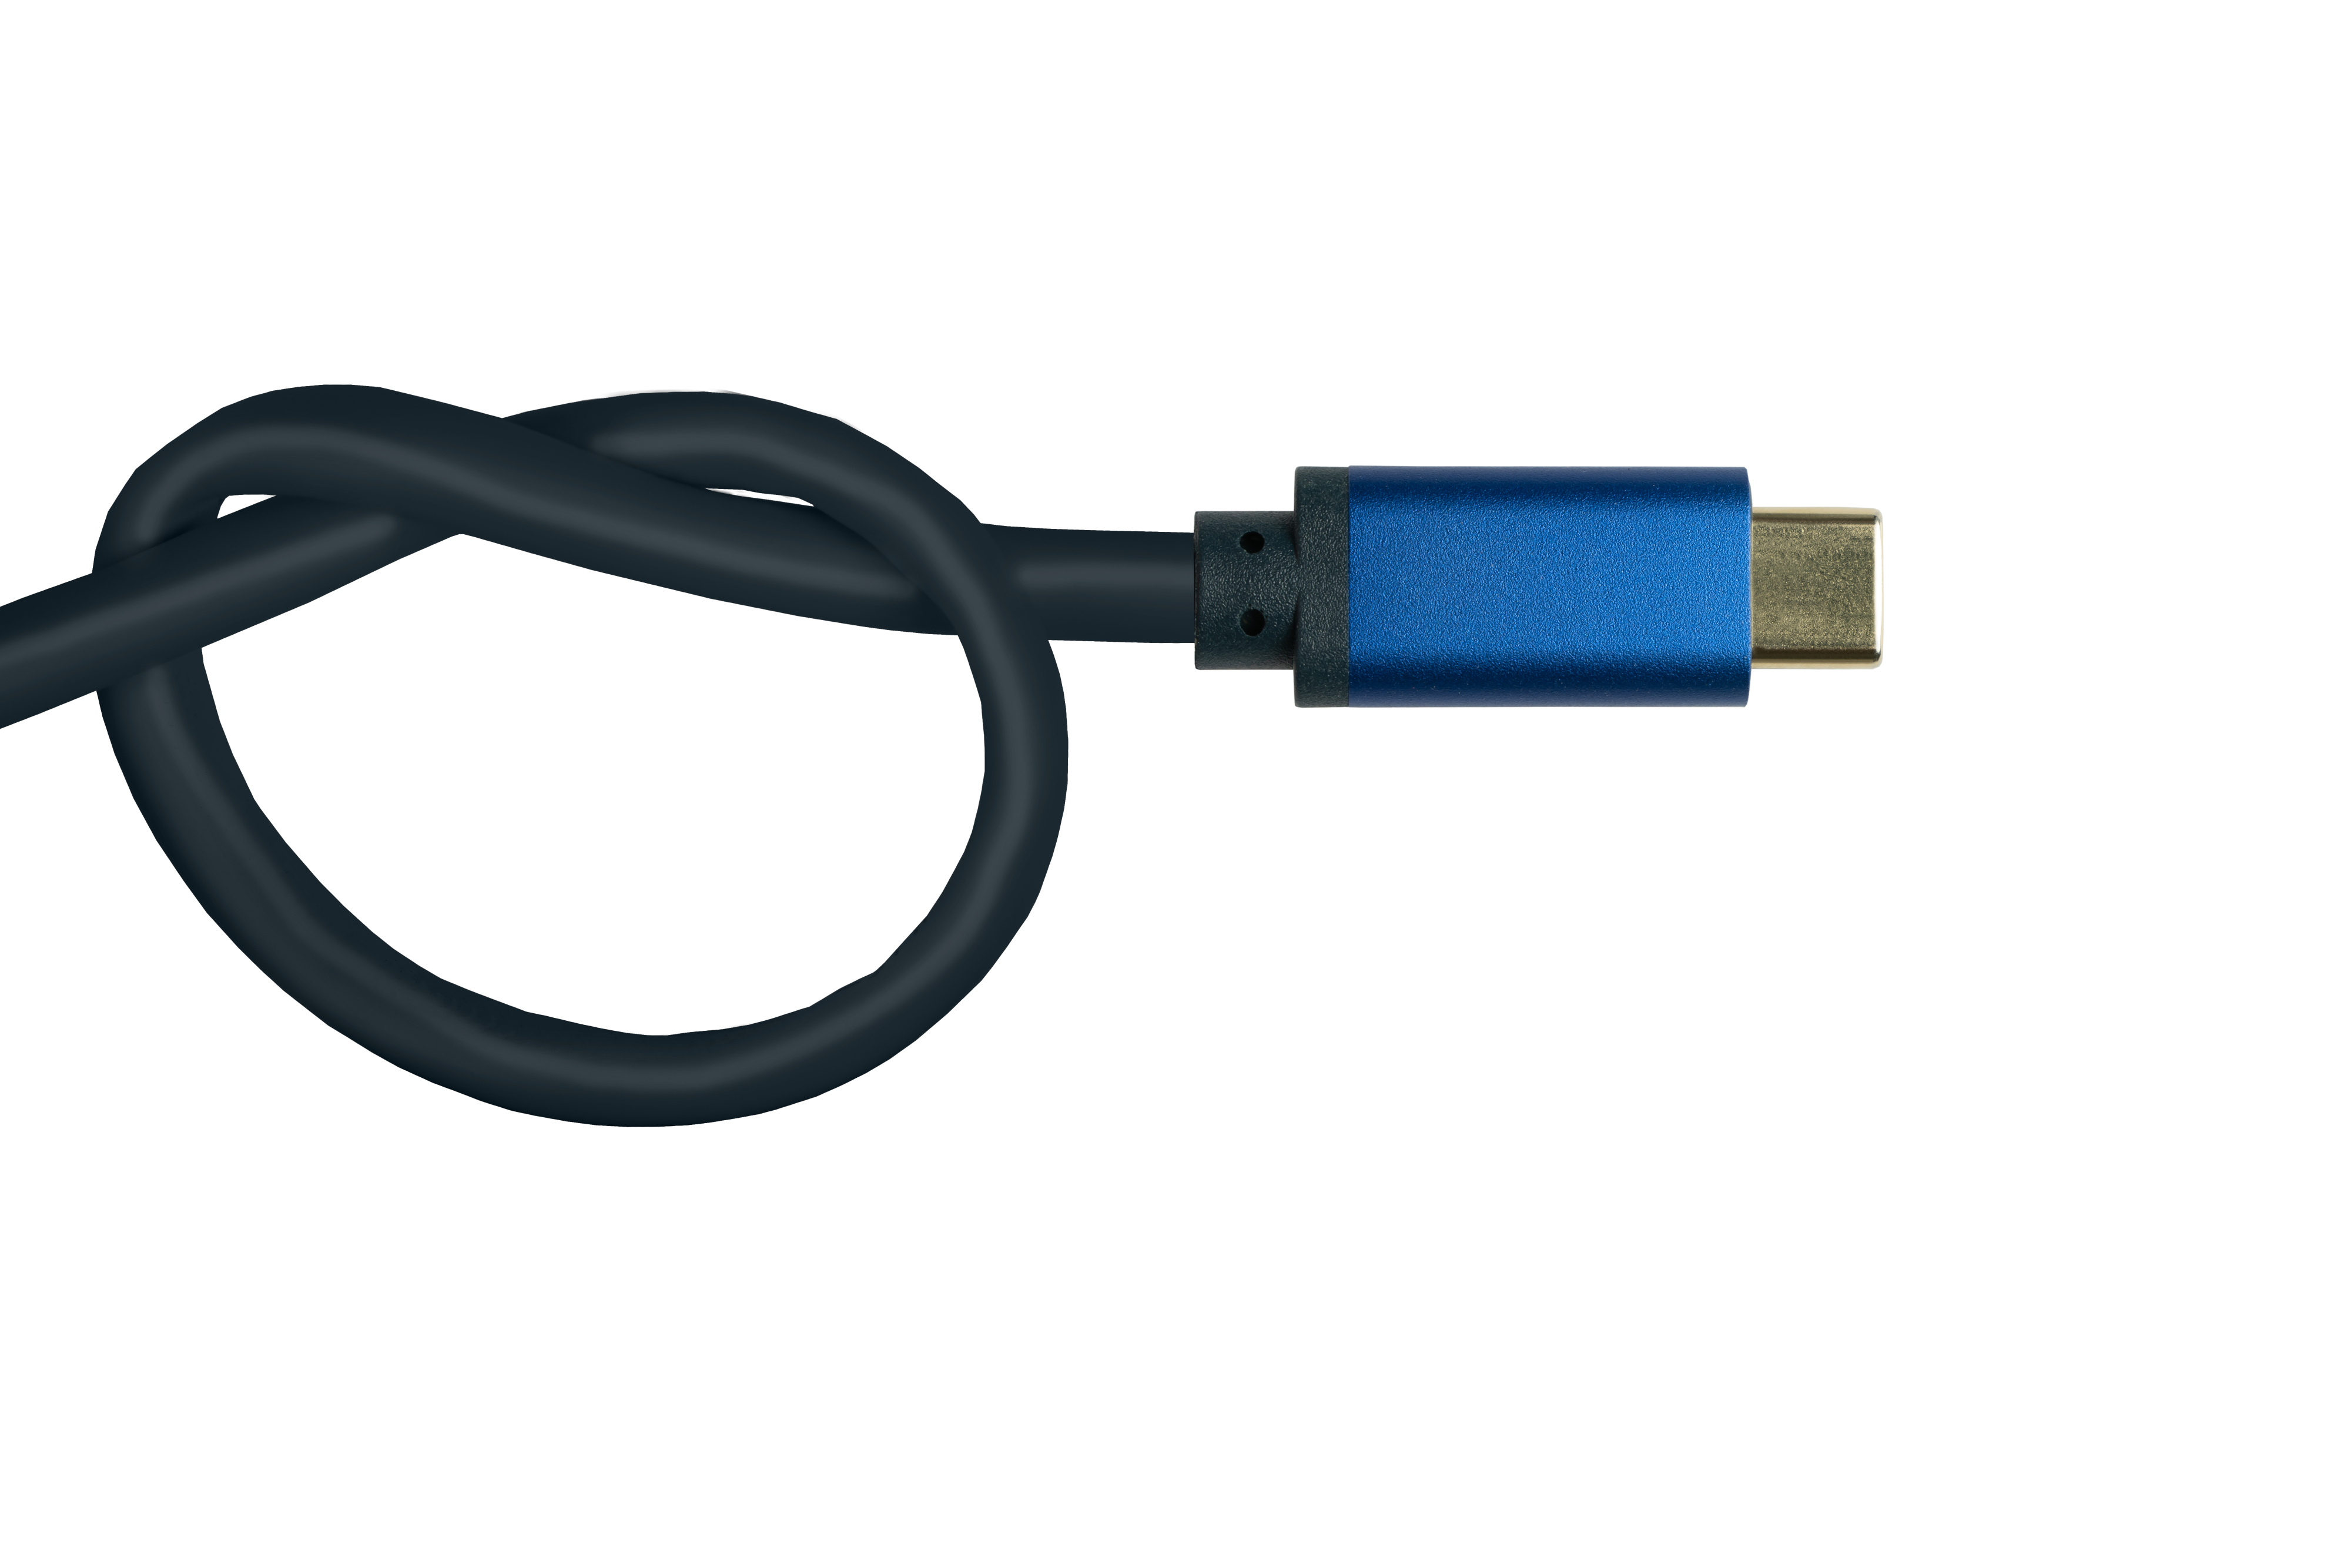 USB-C™ dunkelblau Kabel, SmartFLEX Aluminiumgehäuse, an CONNECTIONS UHD GOOD @60Hz, 2.0b HDMI Adapterkabel 4K CU,